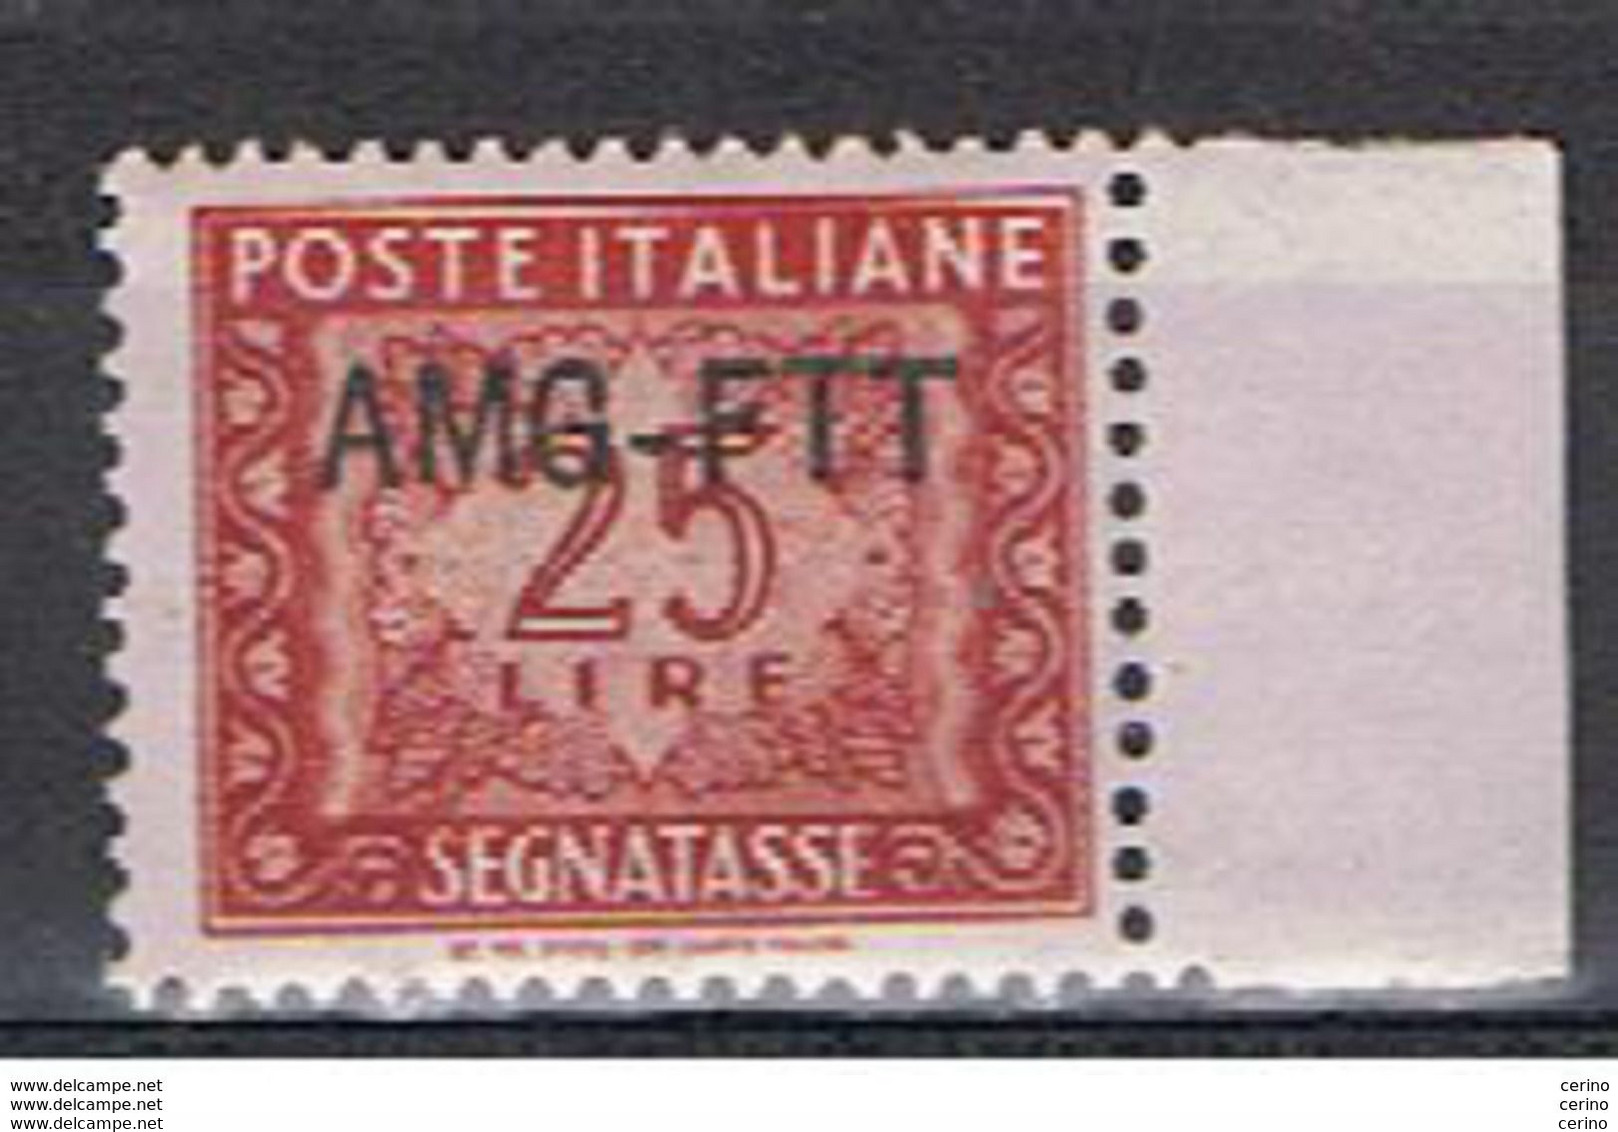 TRIESTE  A:  1952/54  TASSE  FIL. R. III°  -  £. 25  ROSSO  BRUNO  N. -  SASS. 25 - Segnatasse